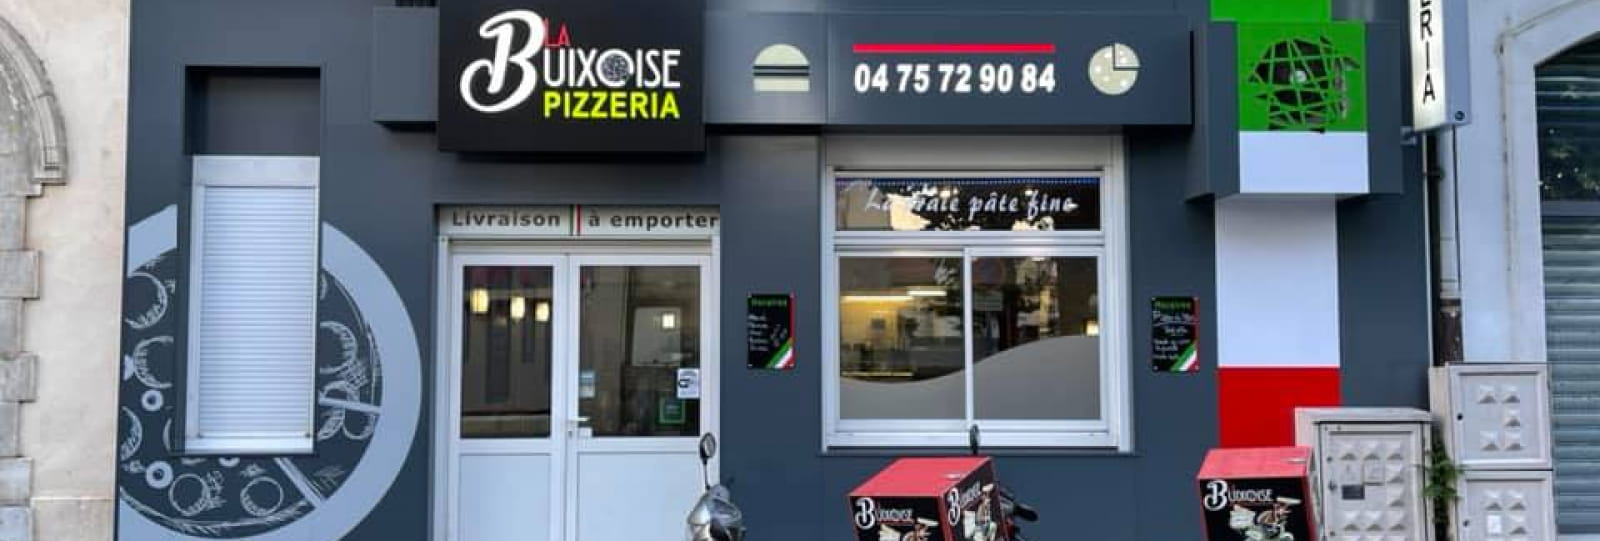 Pizzeria La Buixoise